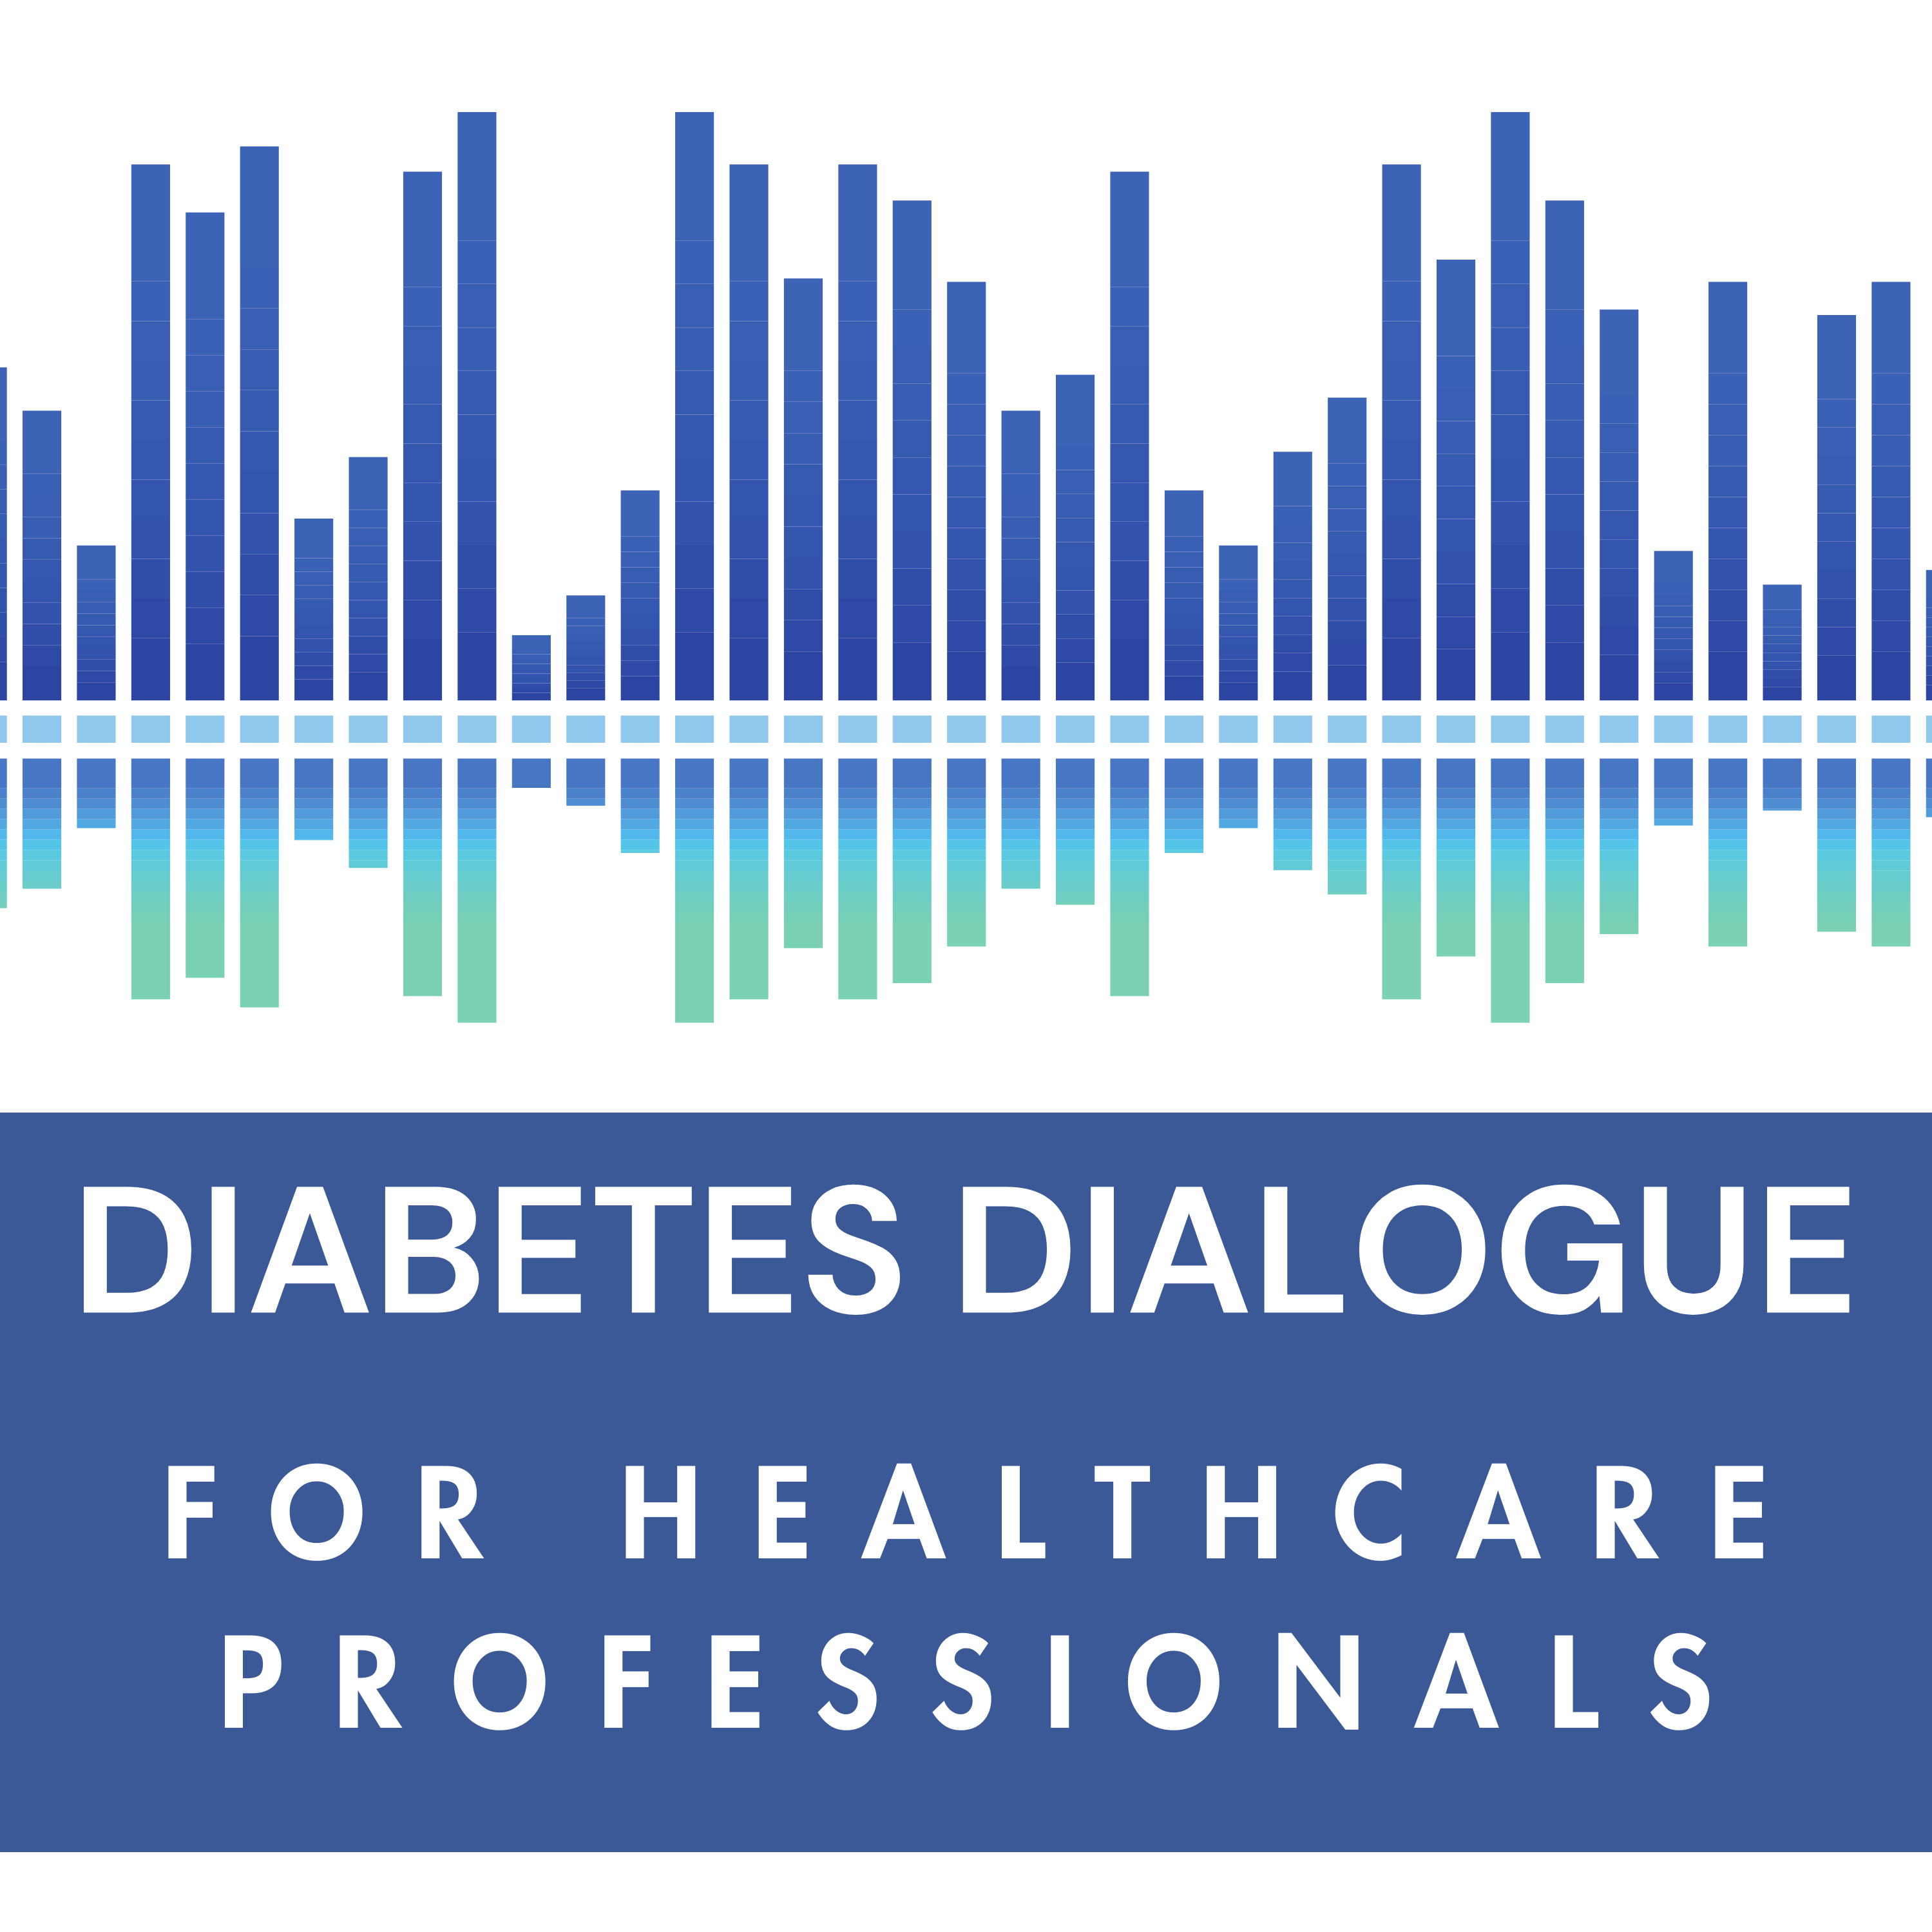 Diabetes Dialogue for Healthcare Professionals